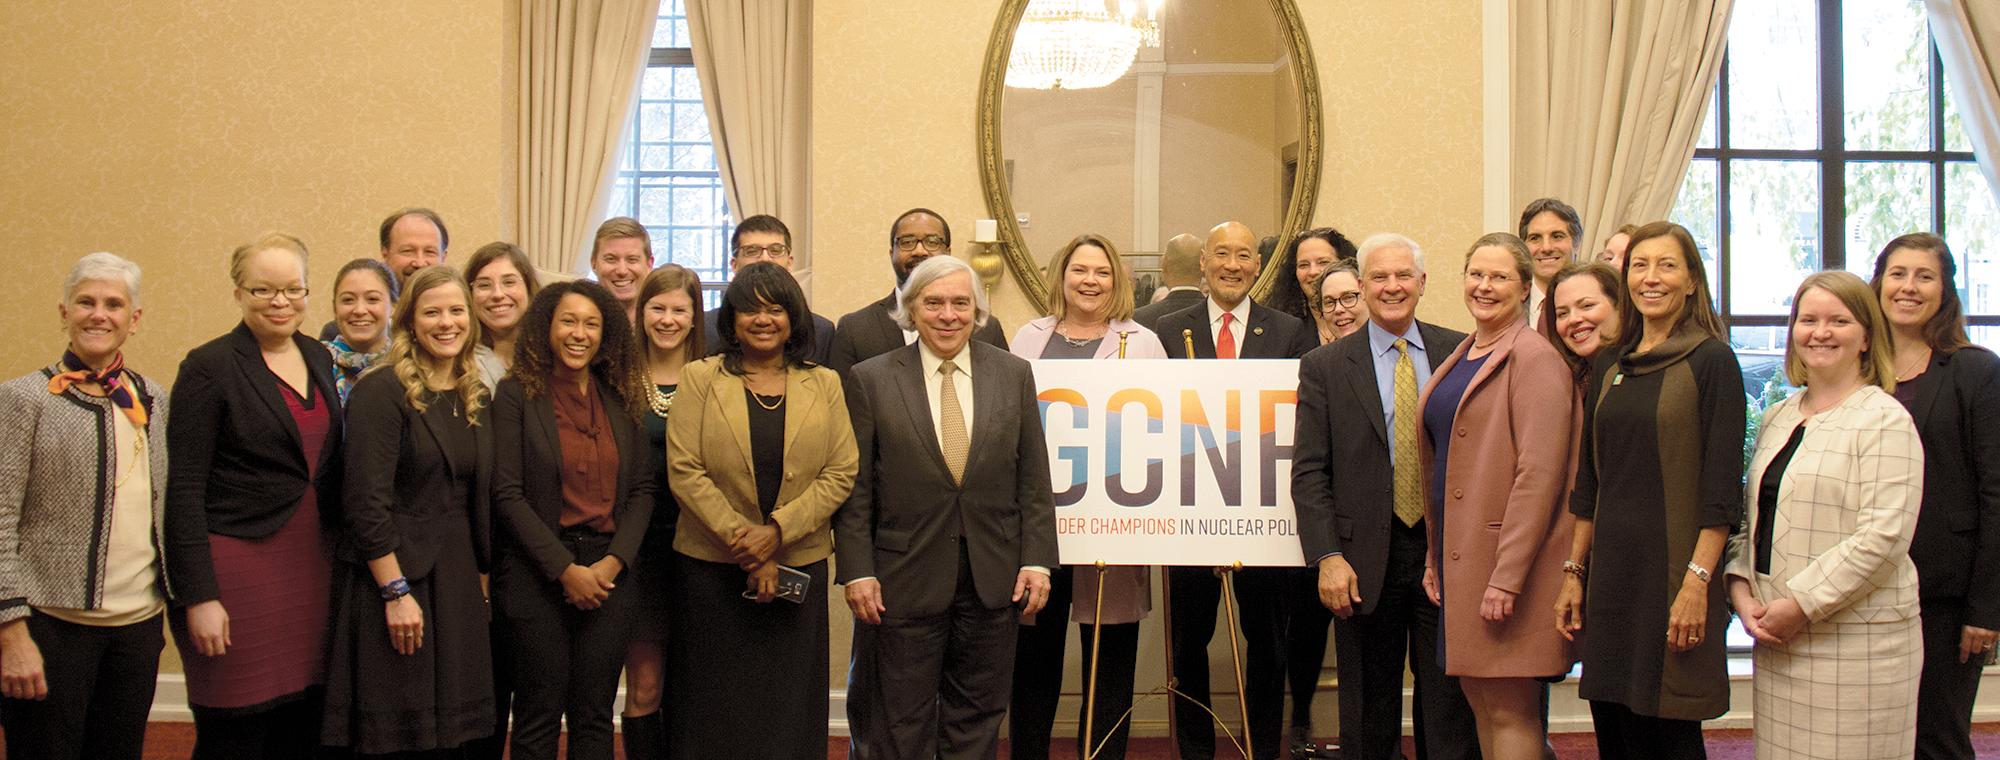 Inaugural class of Gender Champions at the launch of Gender Champions in Nuclear Policy in November 2018, Washington, DC